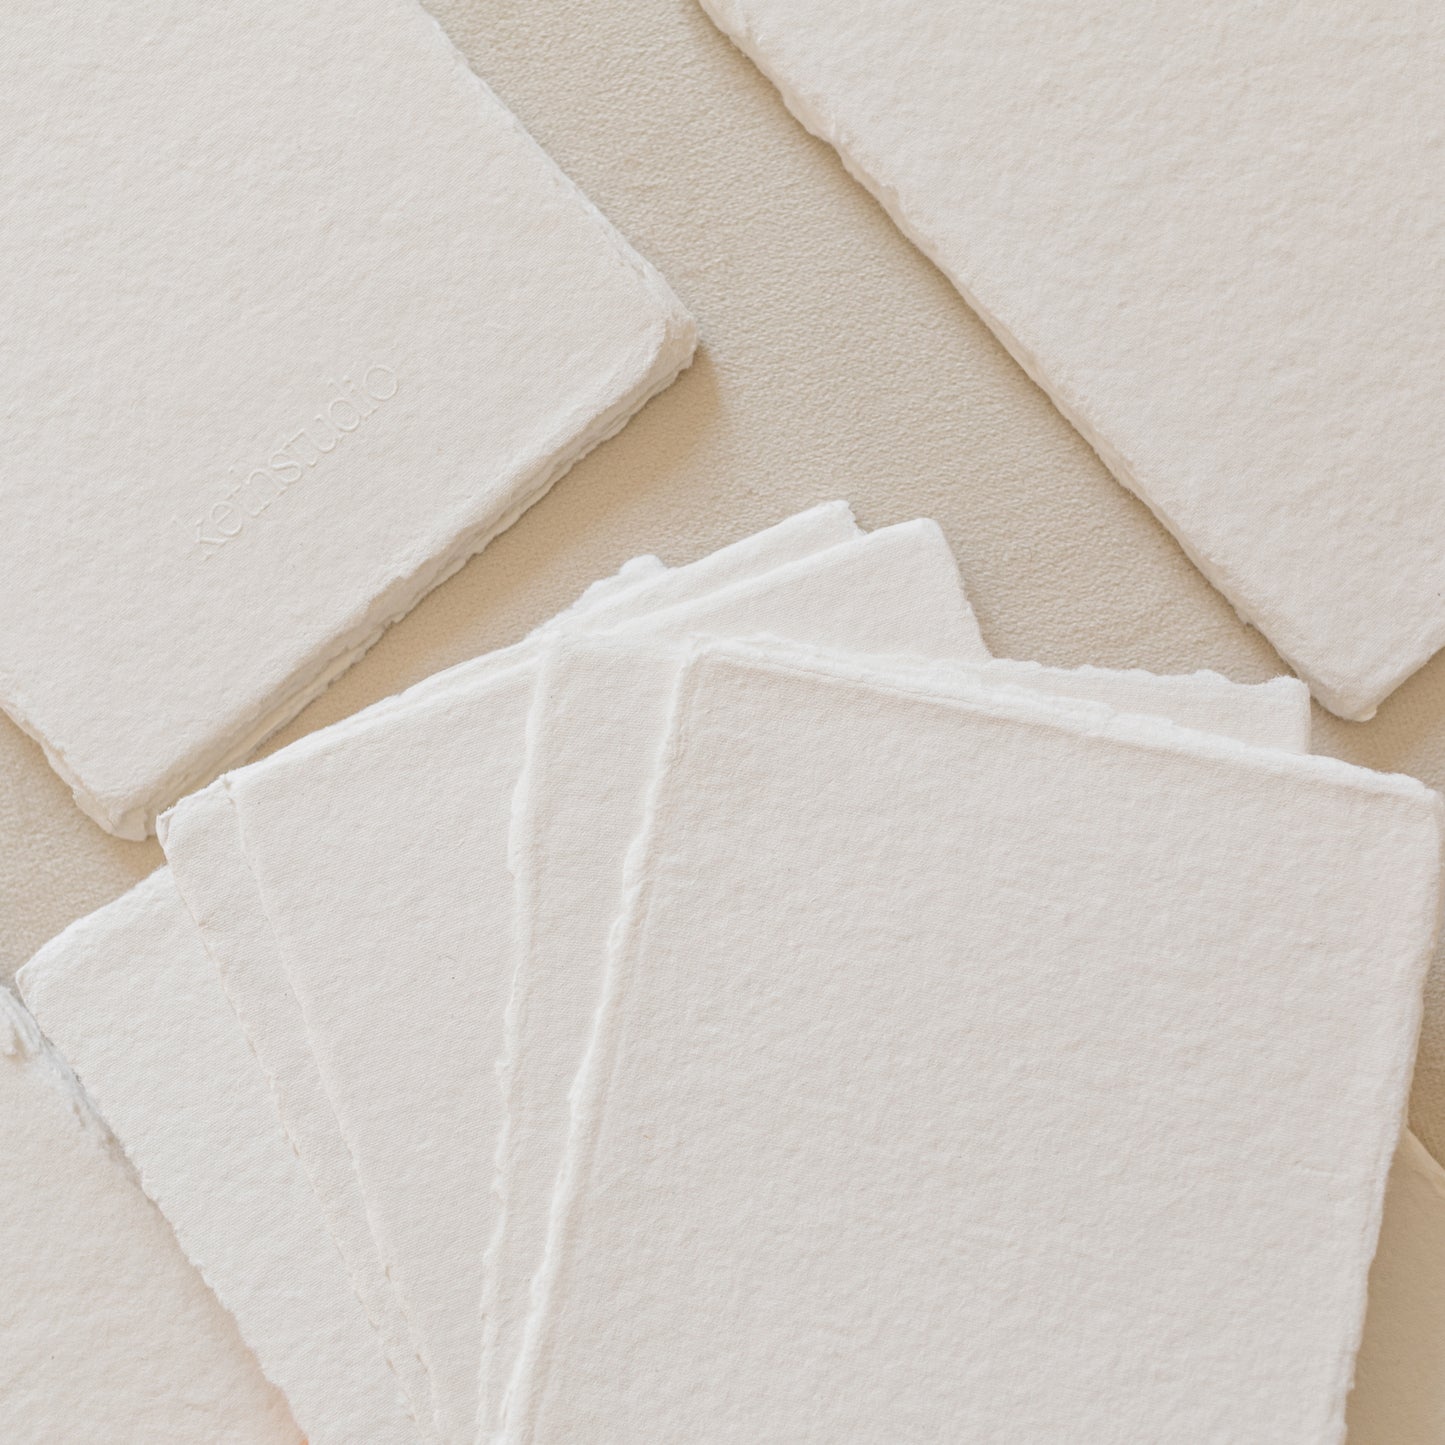 A6 – White Handmade Paper